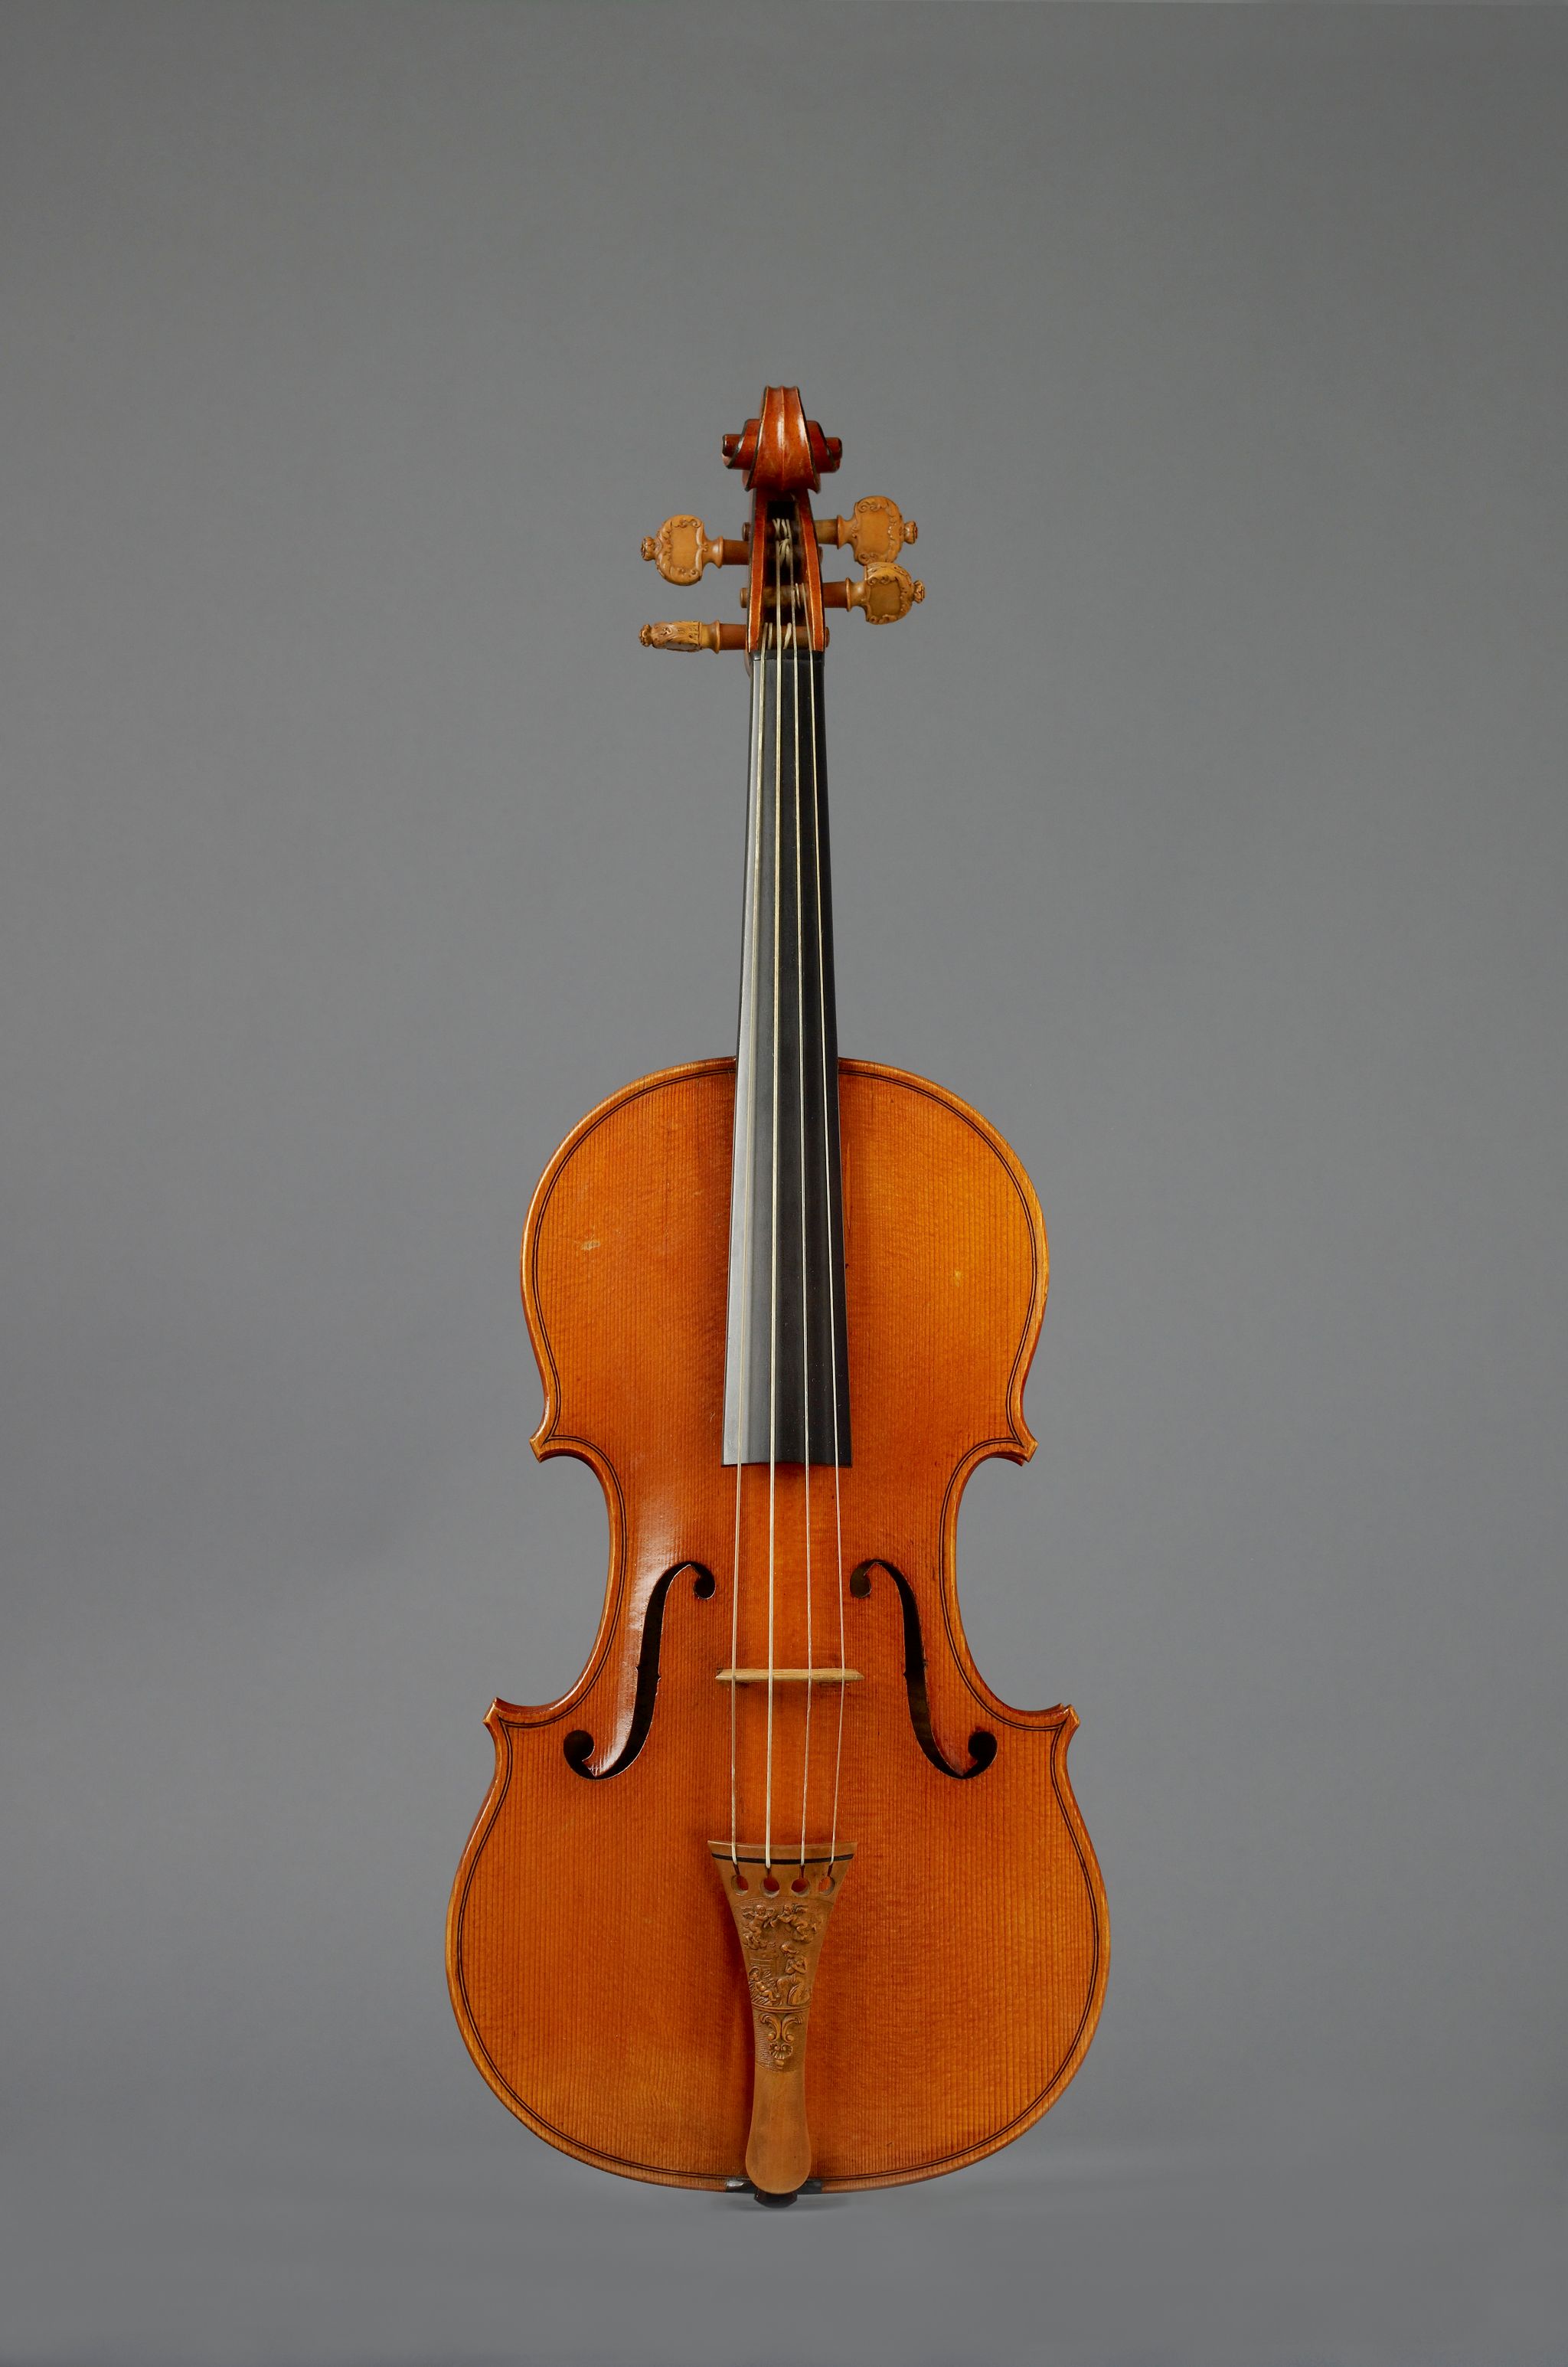 The Messiah violin (Messie)